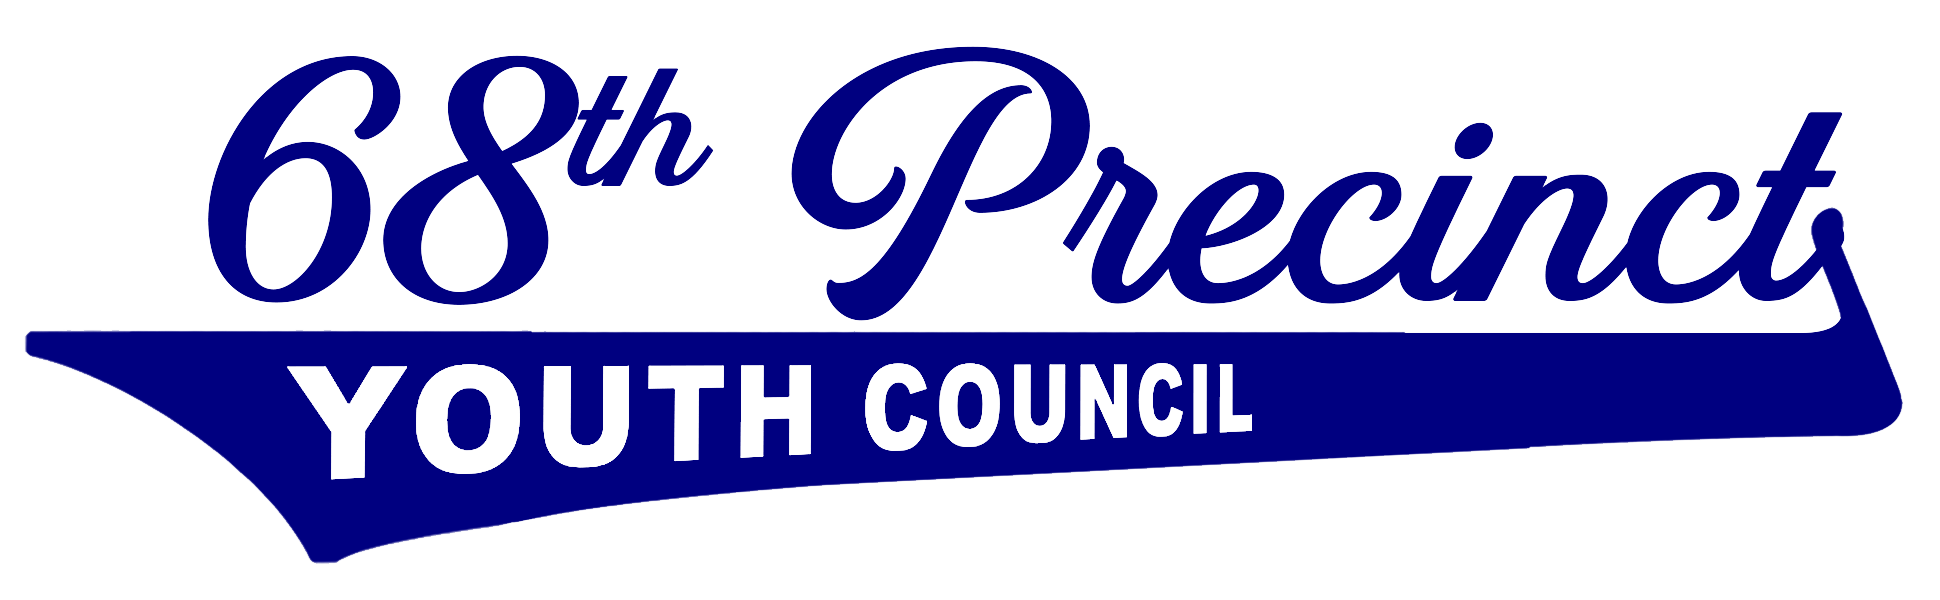 68th Precinct Youth Council